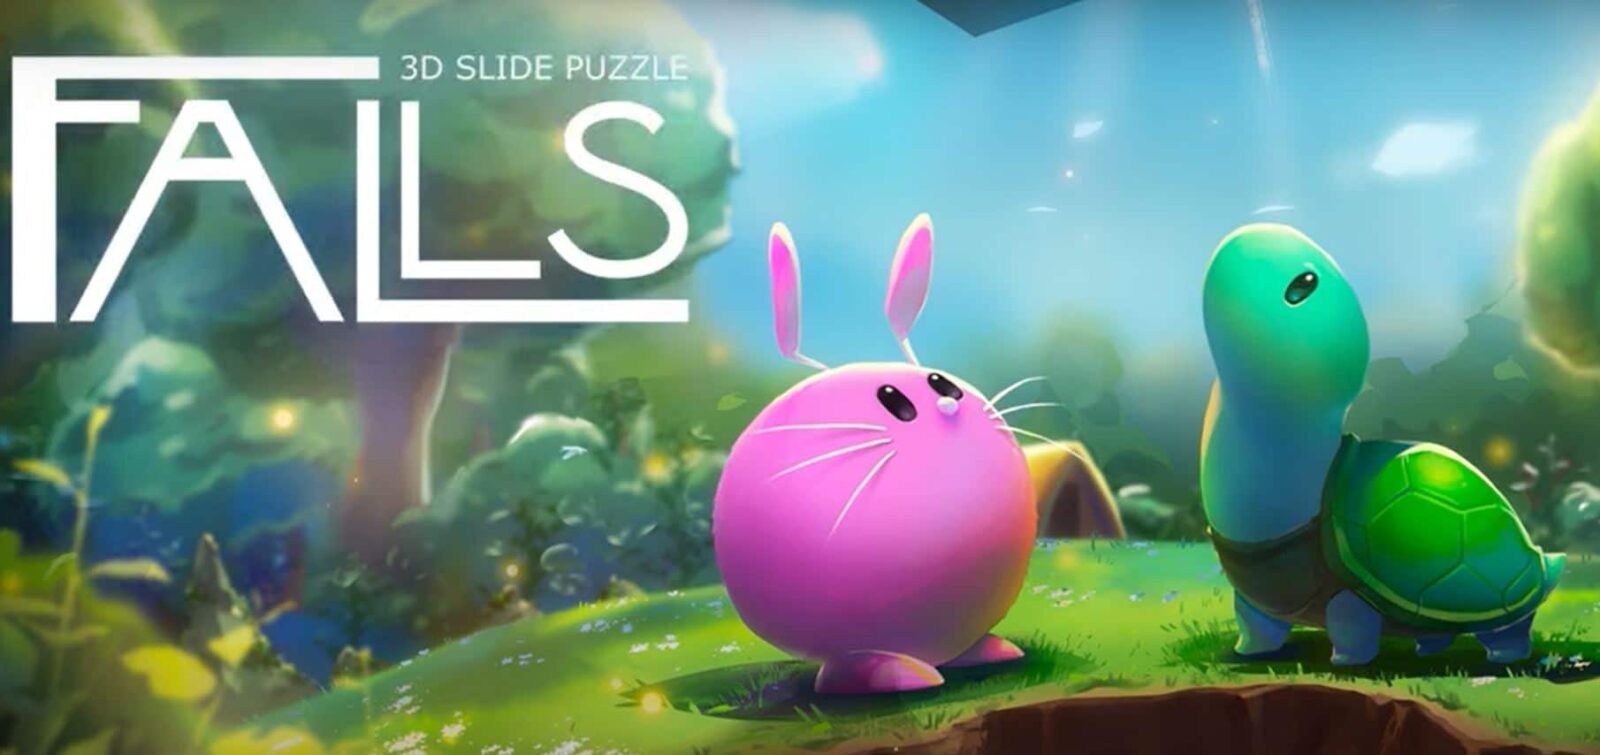 Falls - 3D Slide Puzzle: ora disponibile su iOS e Android thumbnail